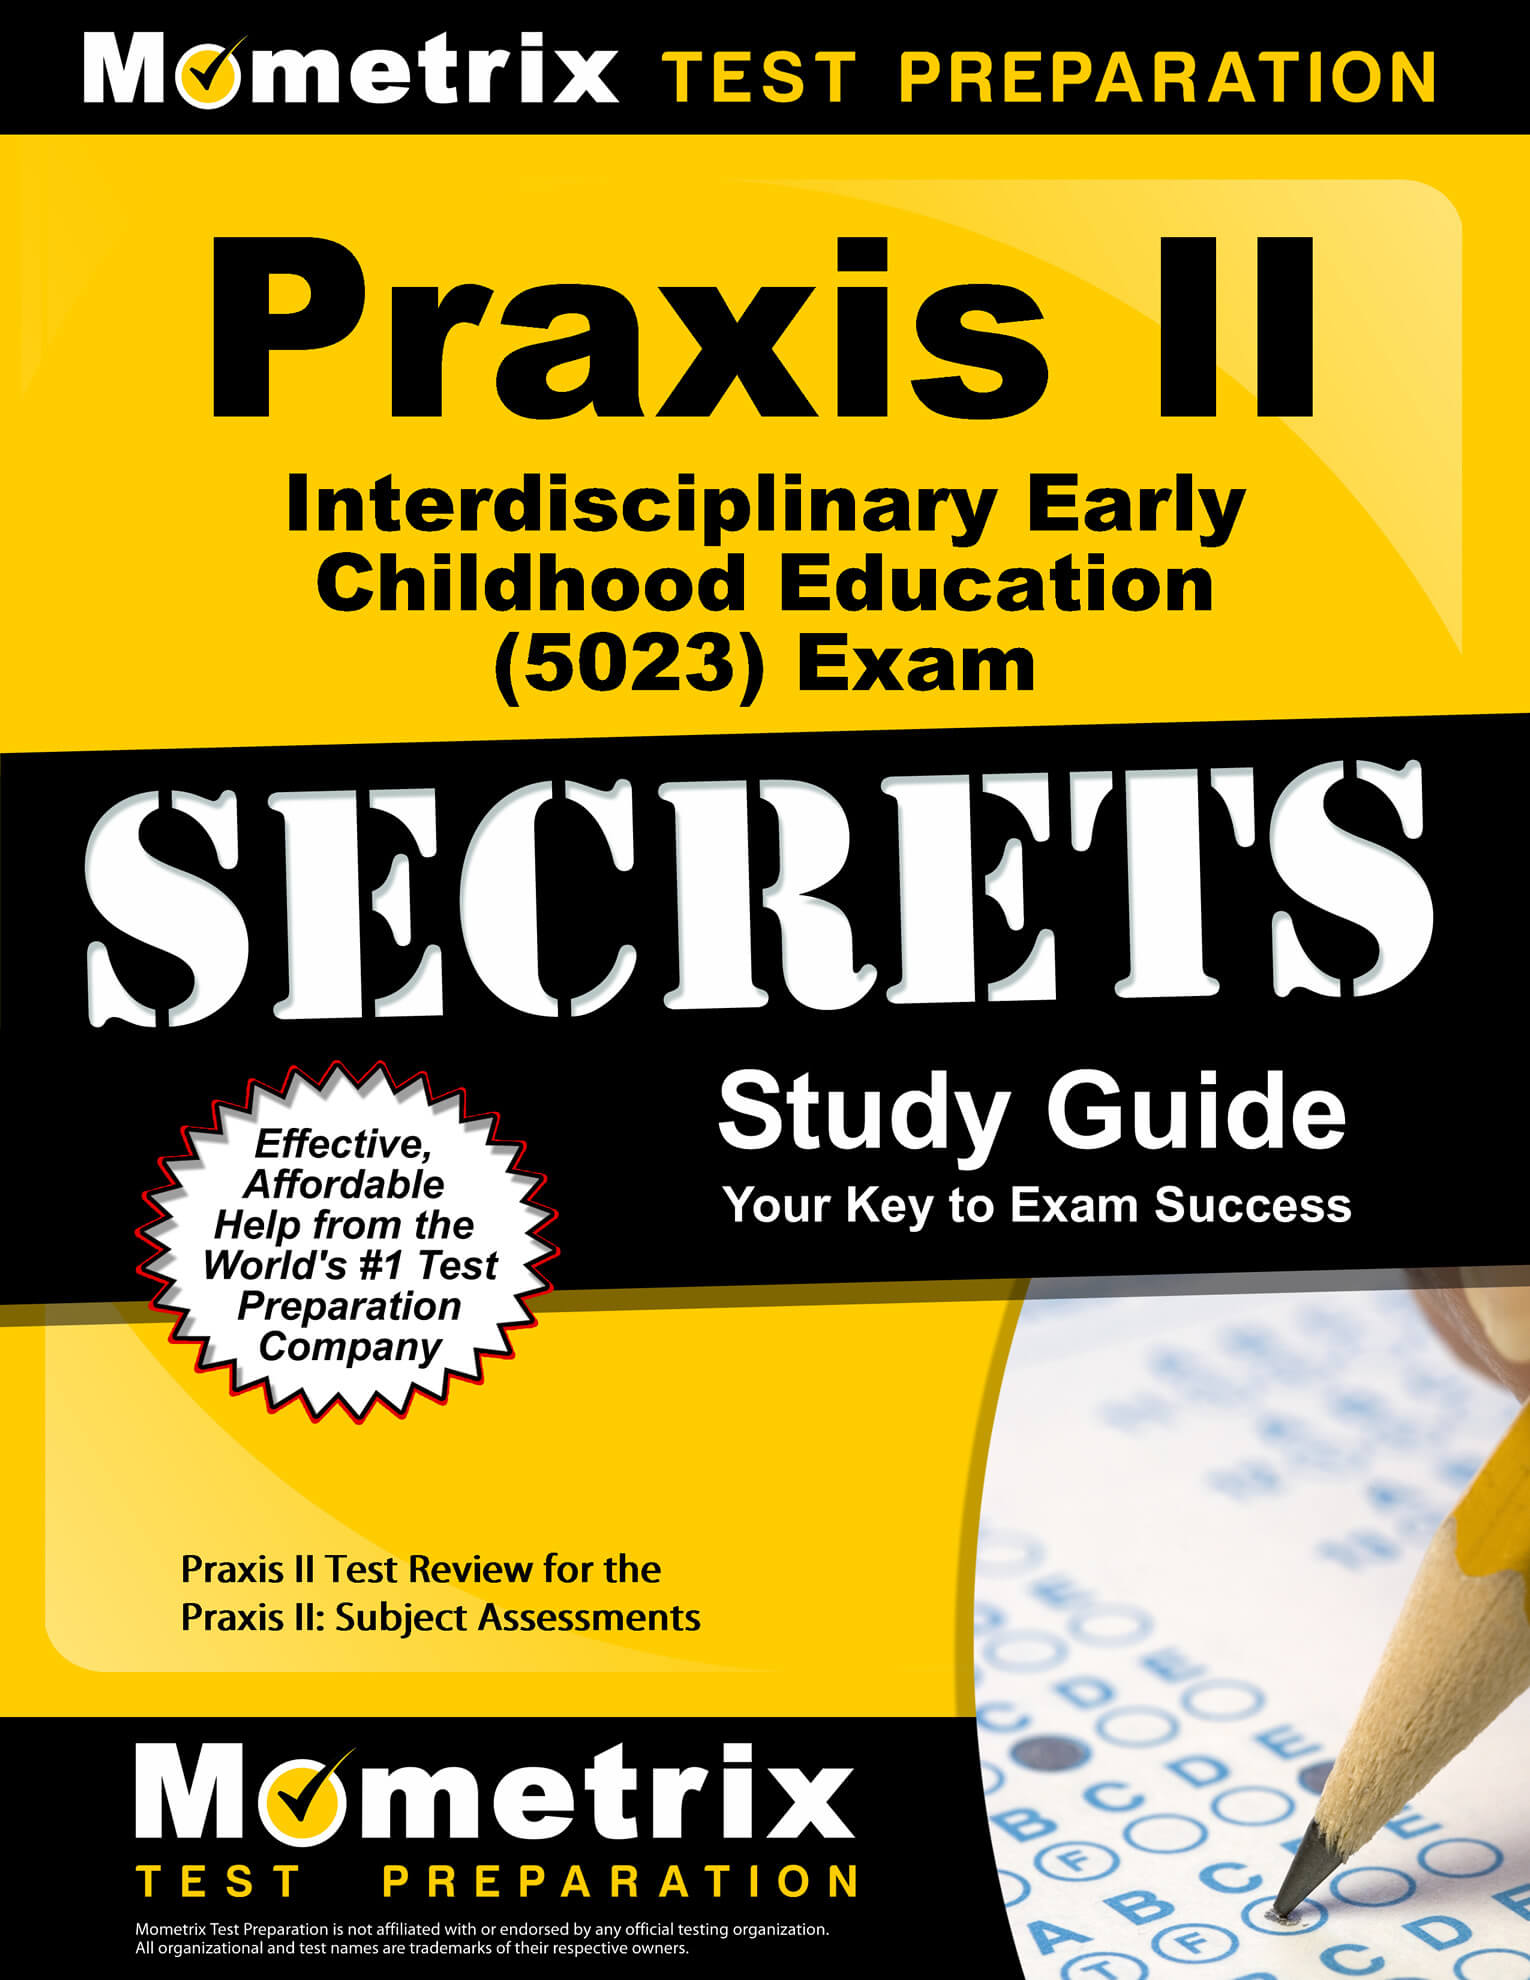 Praxis II Interdisciplinary Early Childhood Education Study Guide